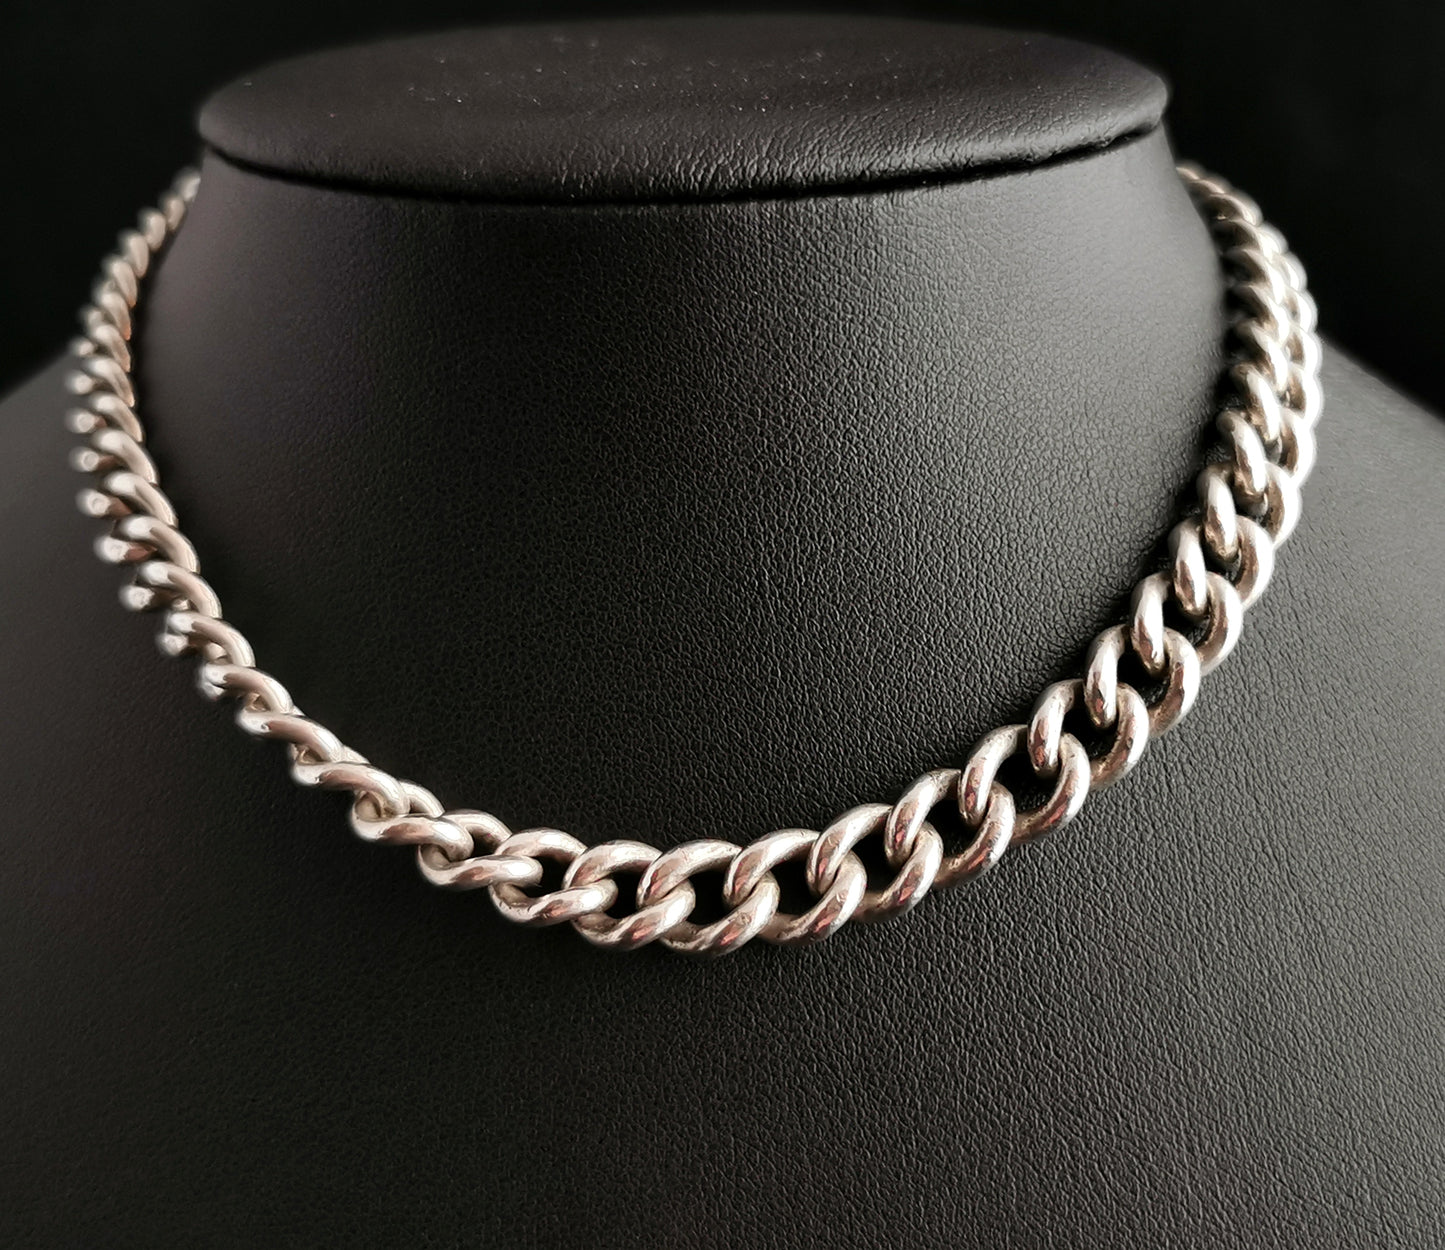 Antique Art Deco silver Albert chain, watch chain